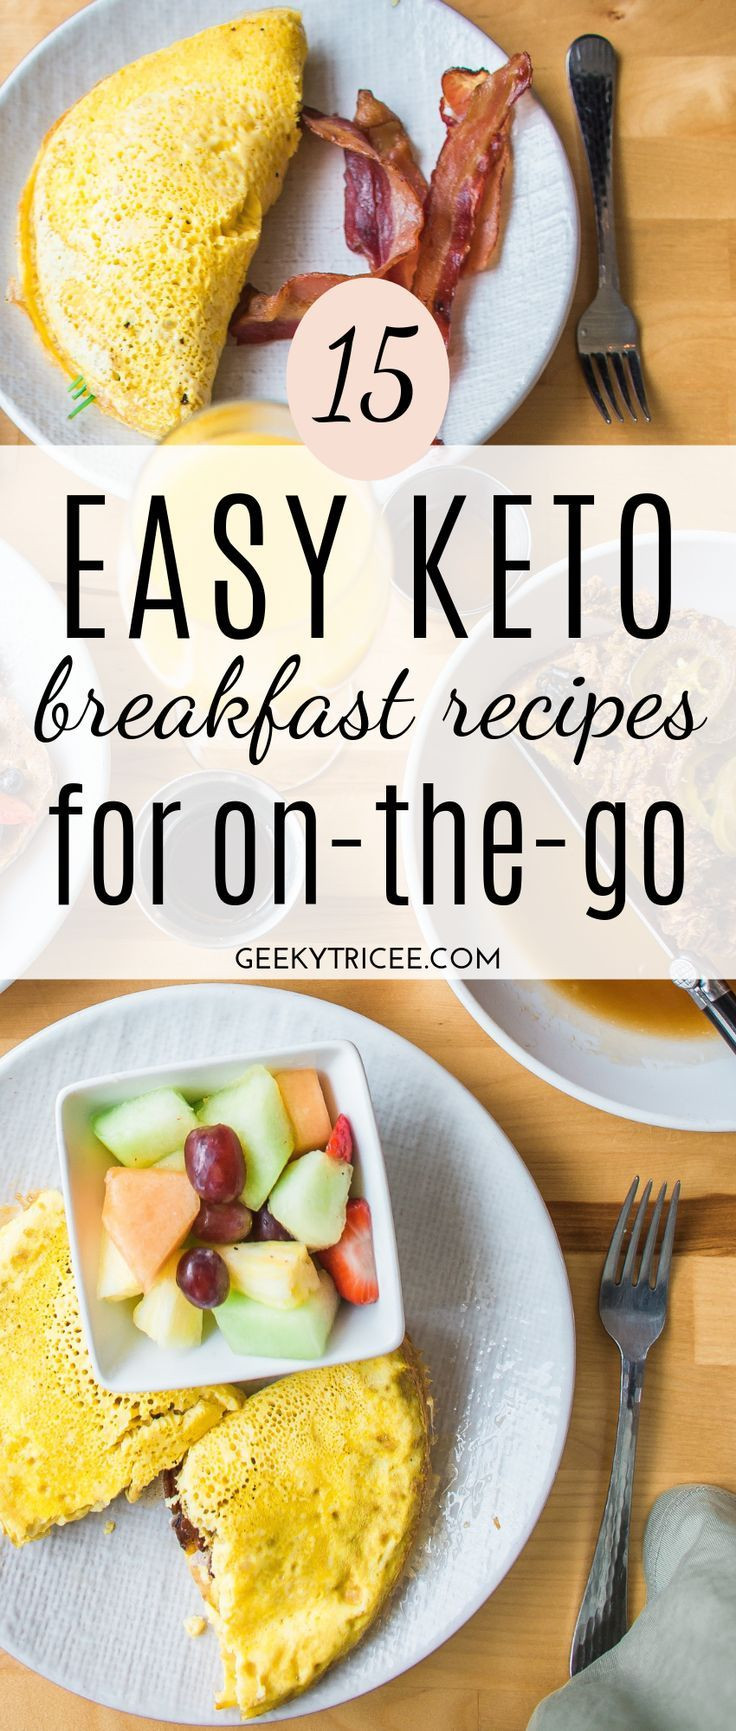 Clean Keto Breakfast Ideas
 15 keto breakfast recipes for those on the go mornings